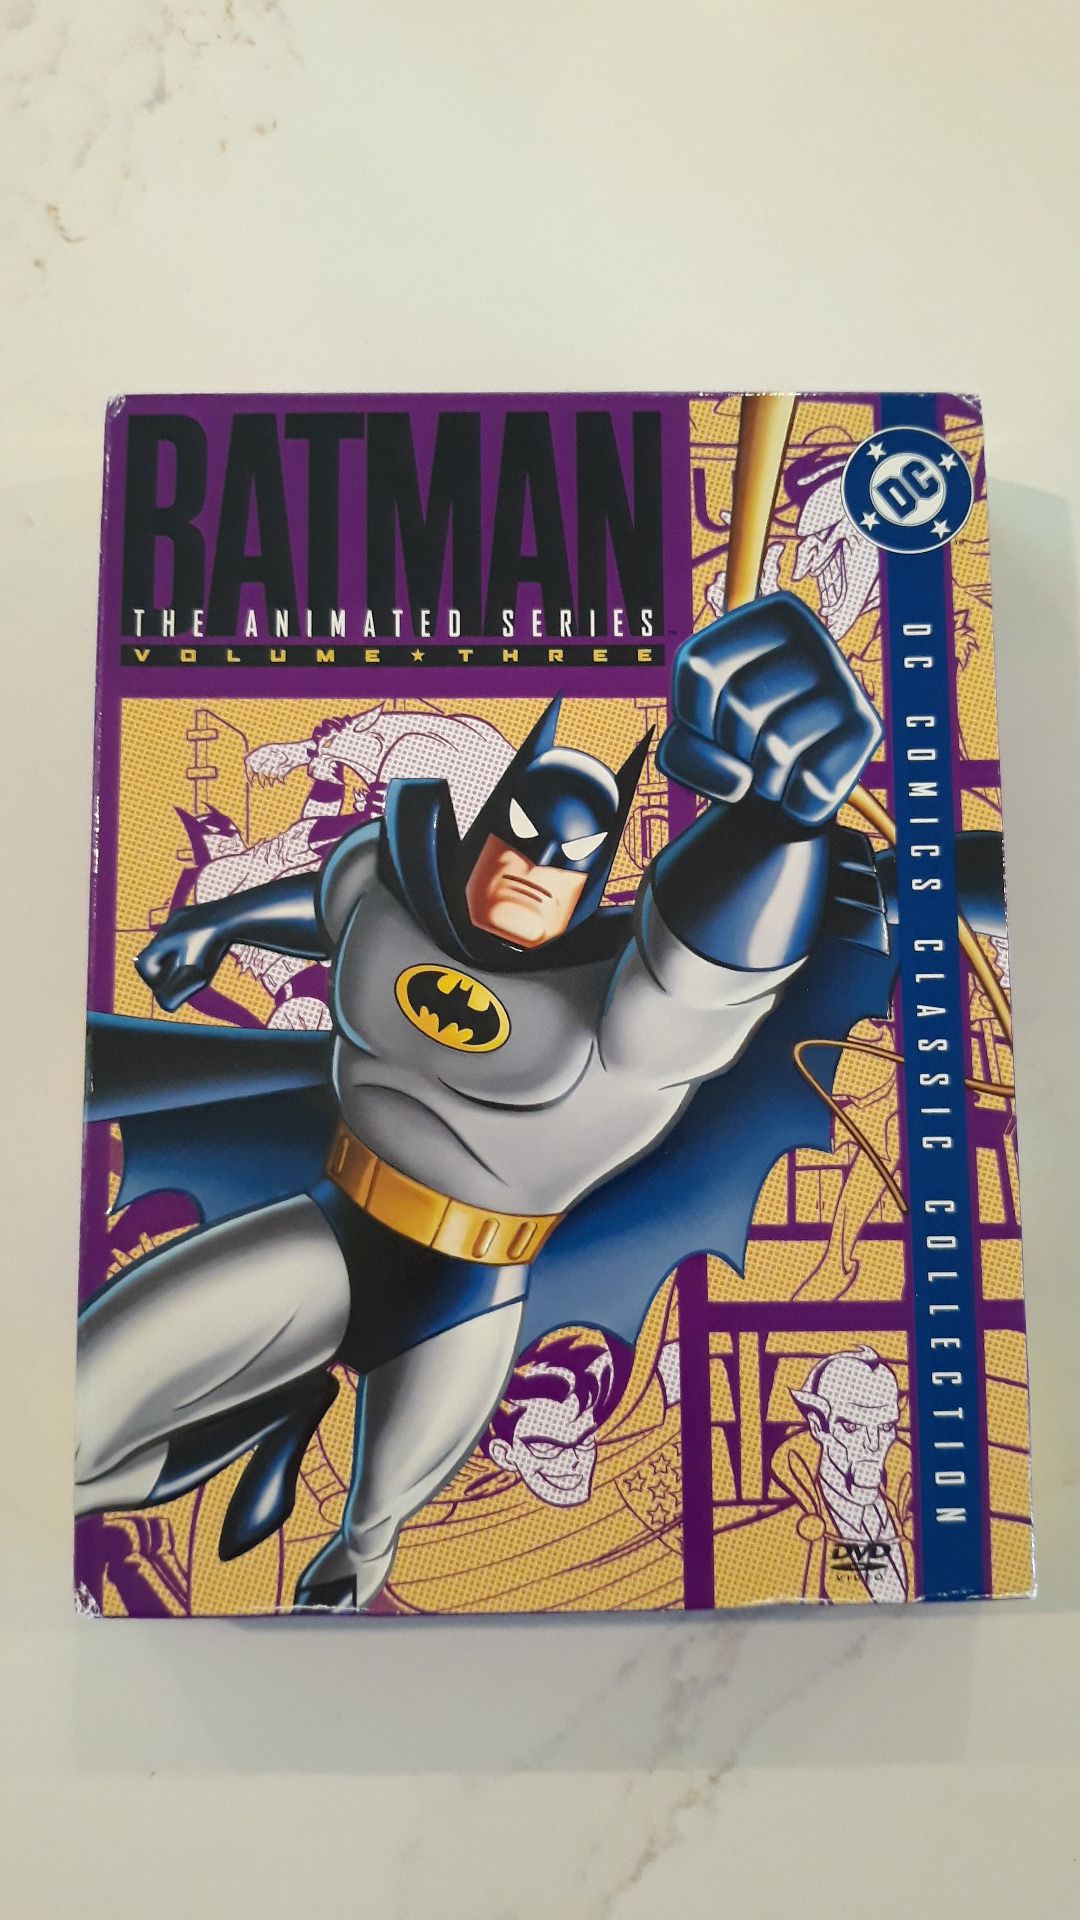 Batman the Animated Series volume 3 DVD